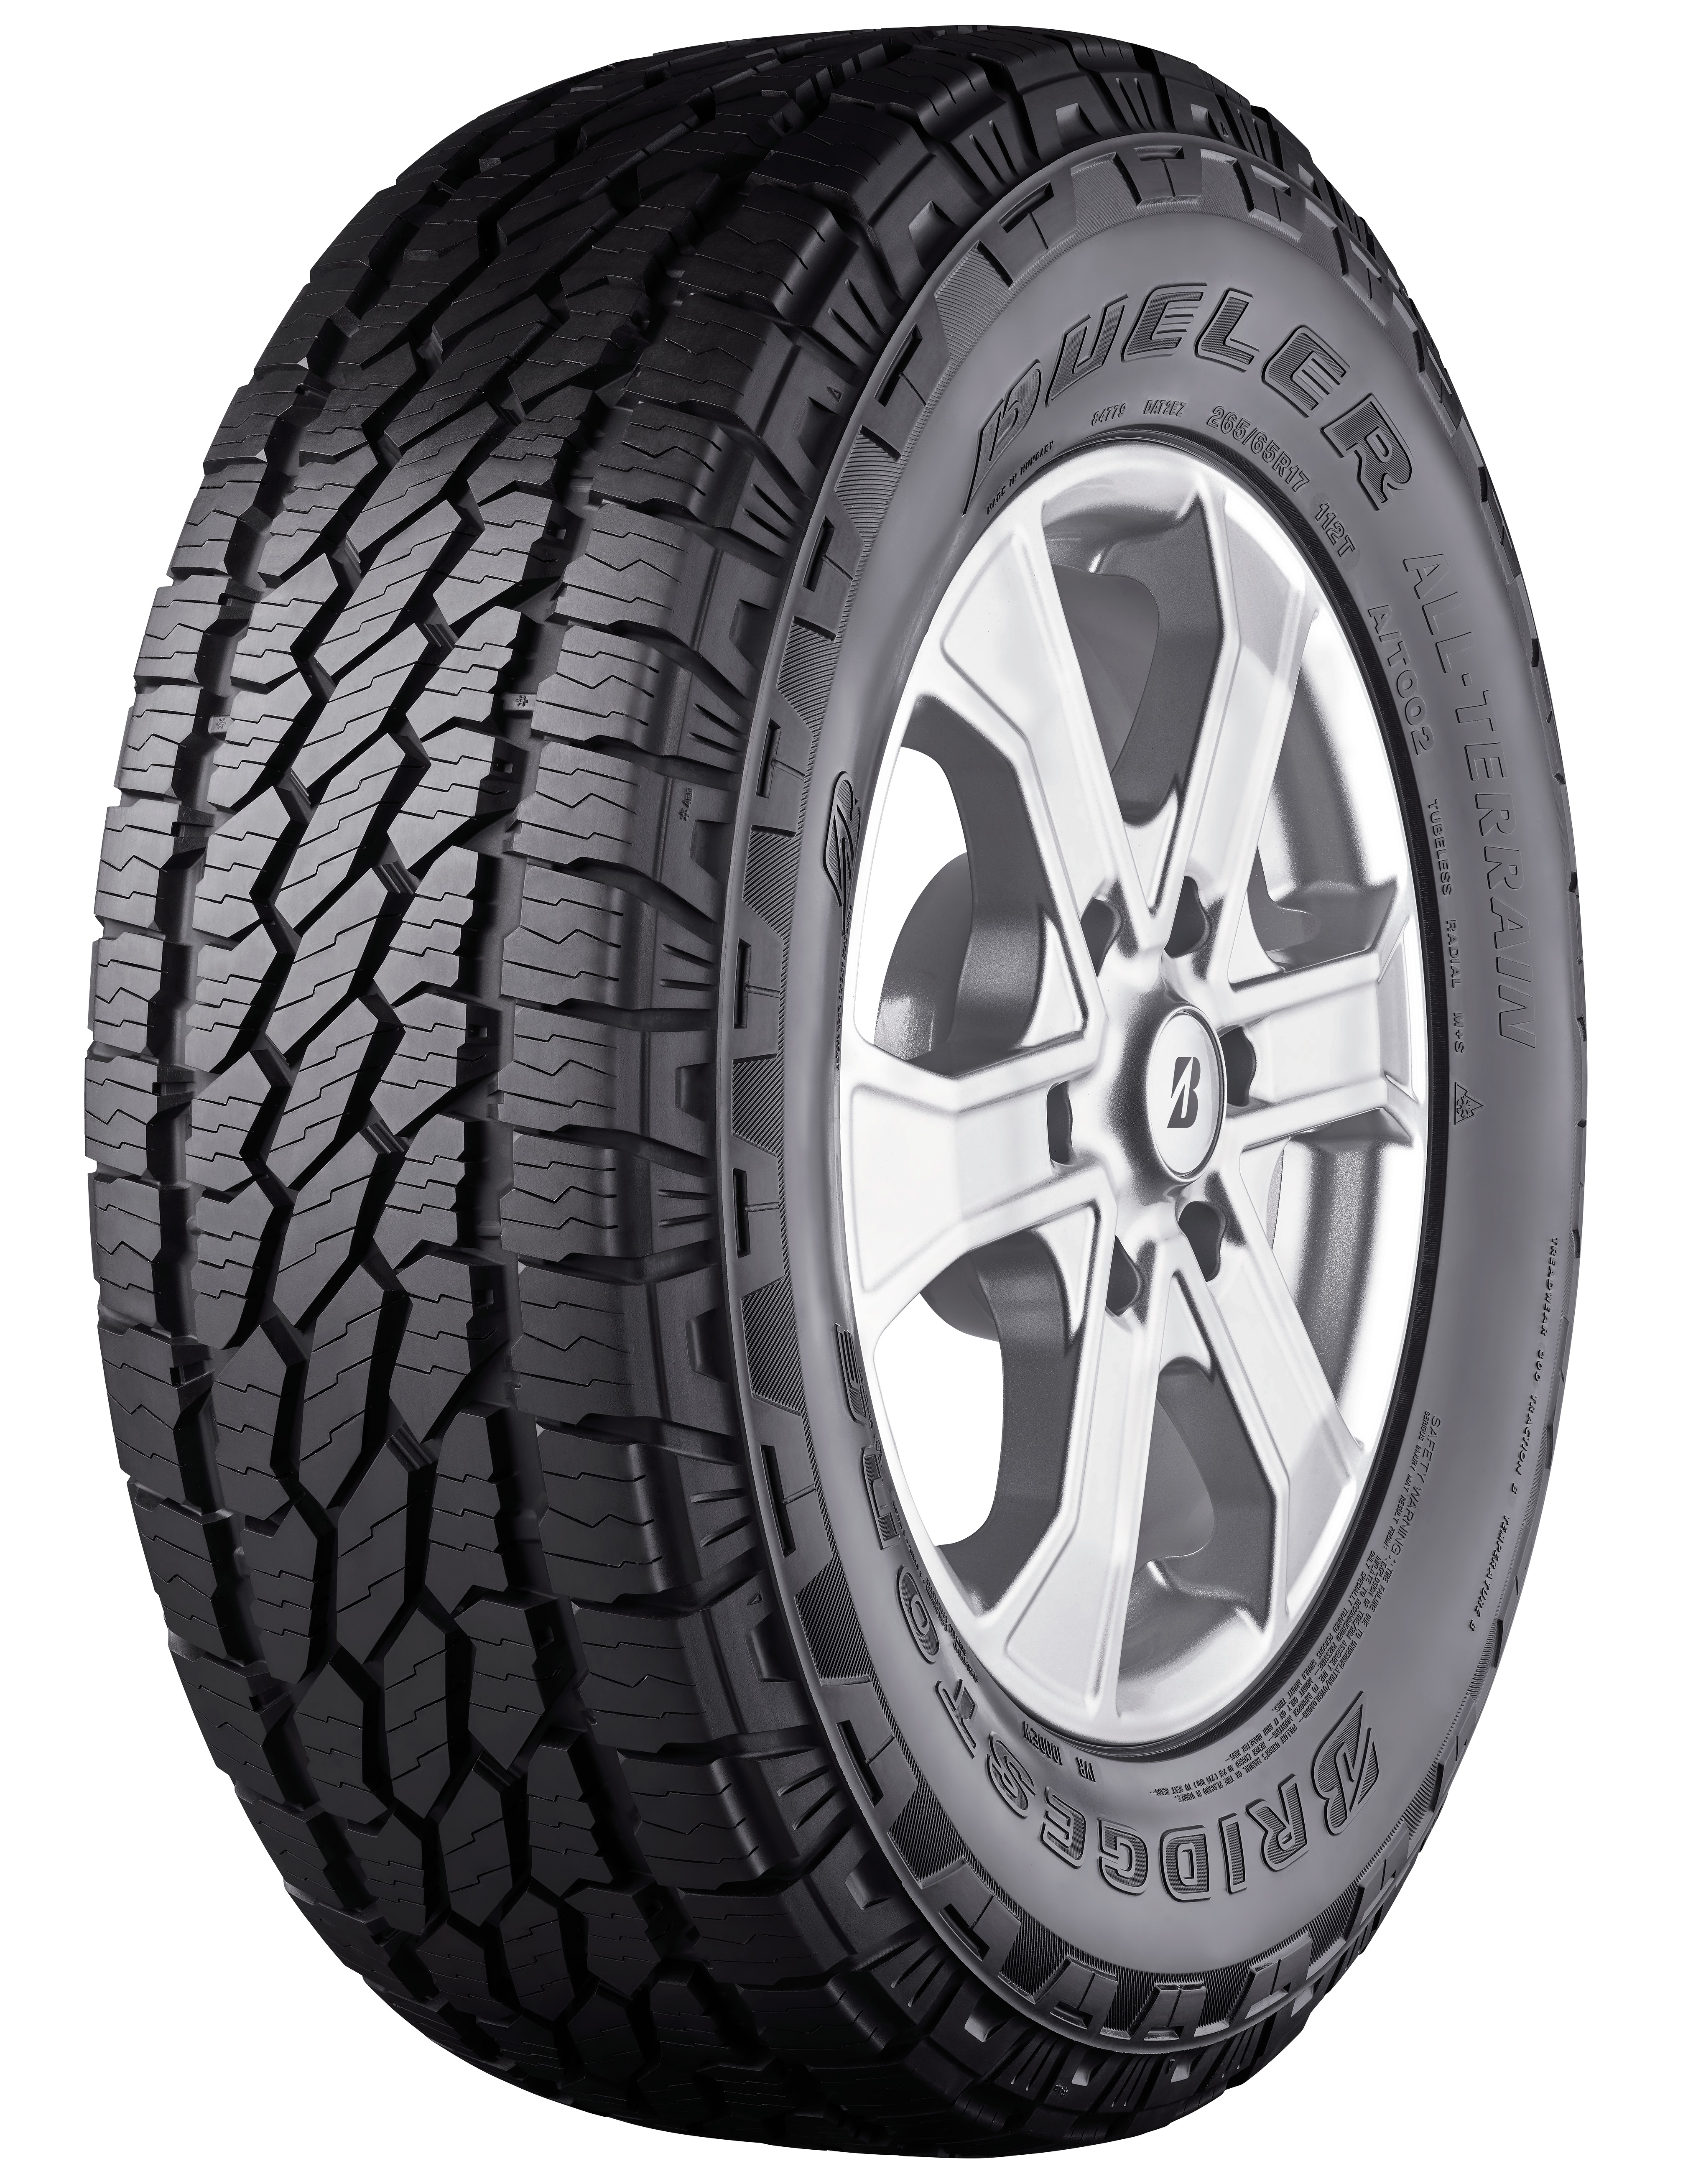 Bridgestone Dueler Reviews All Terrain Tyre AT002 and - Tests